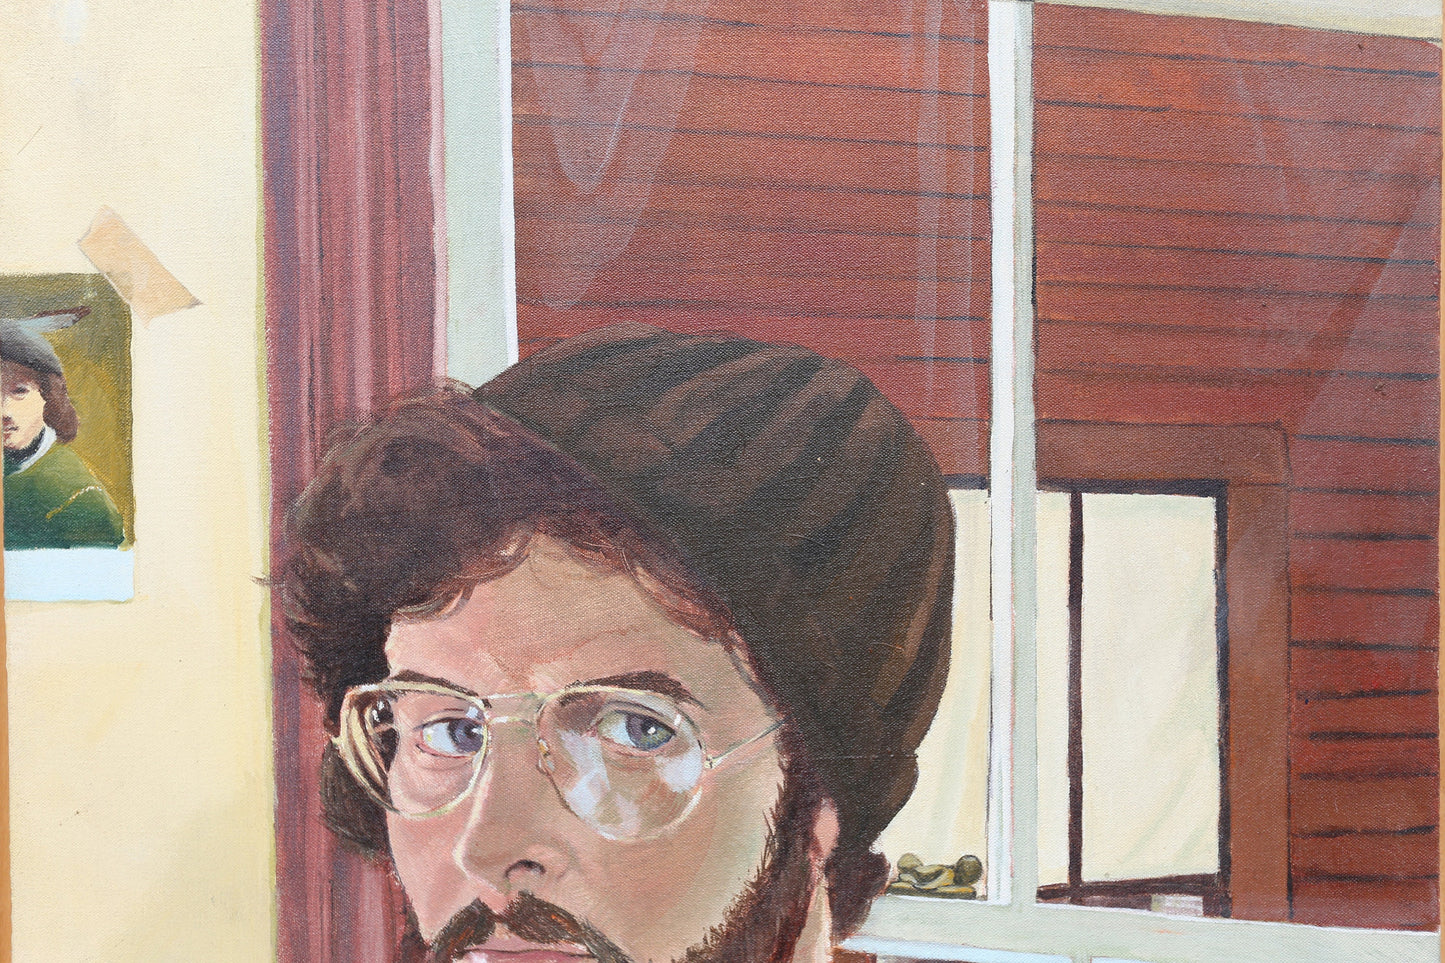 Michael Costello Painting Provincetown Self Portrait Oil on Canvas 1979 Cape Cod Artist